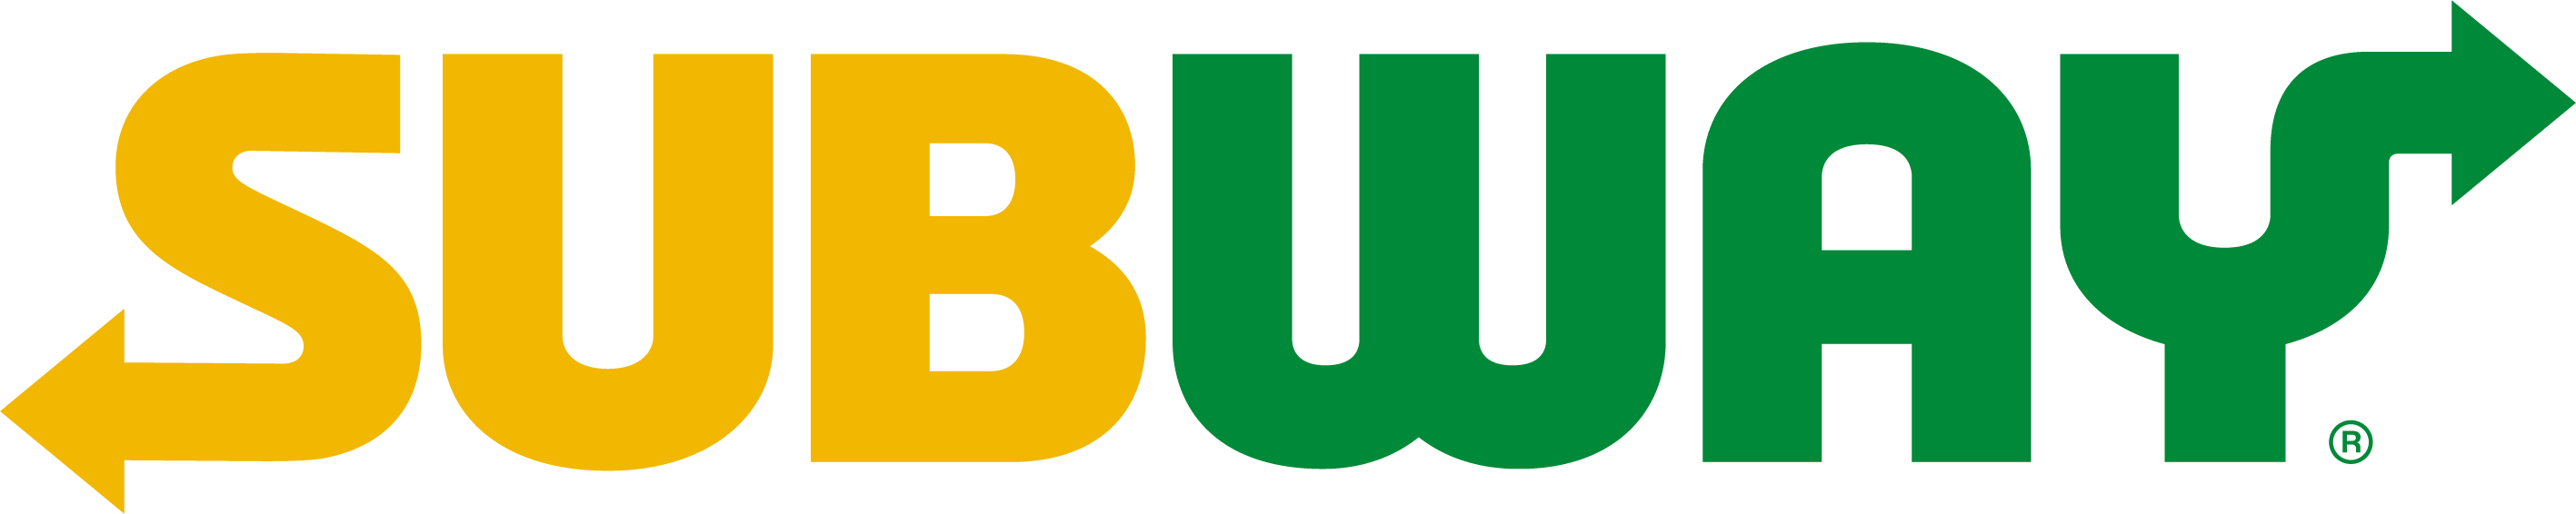 Subway.logo